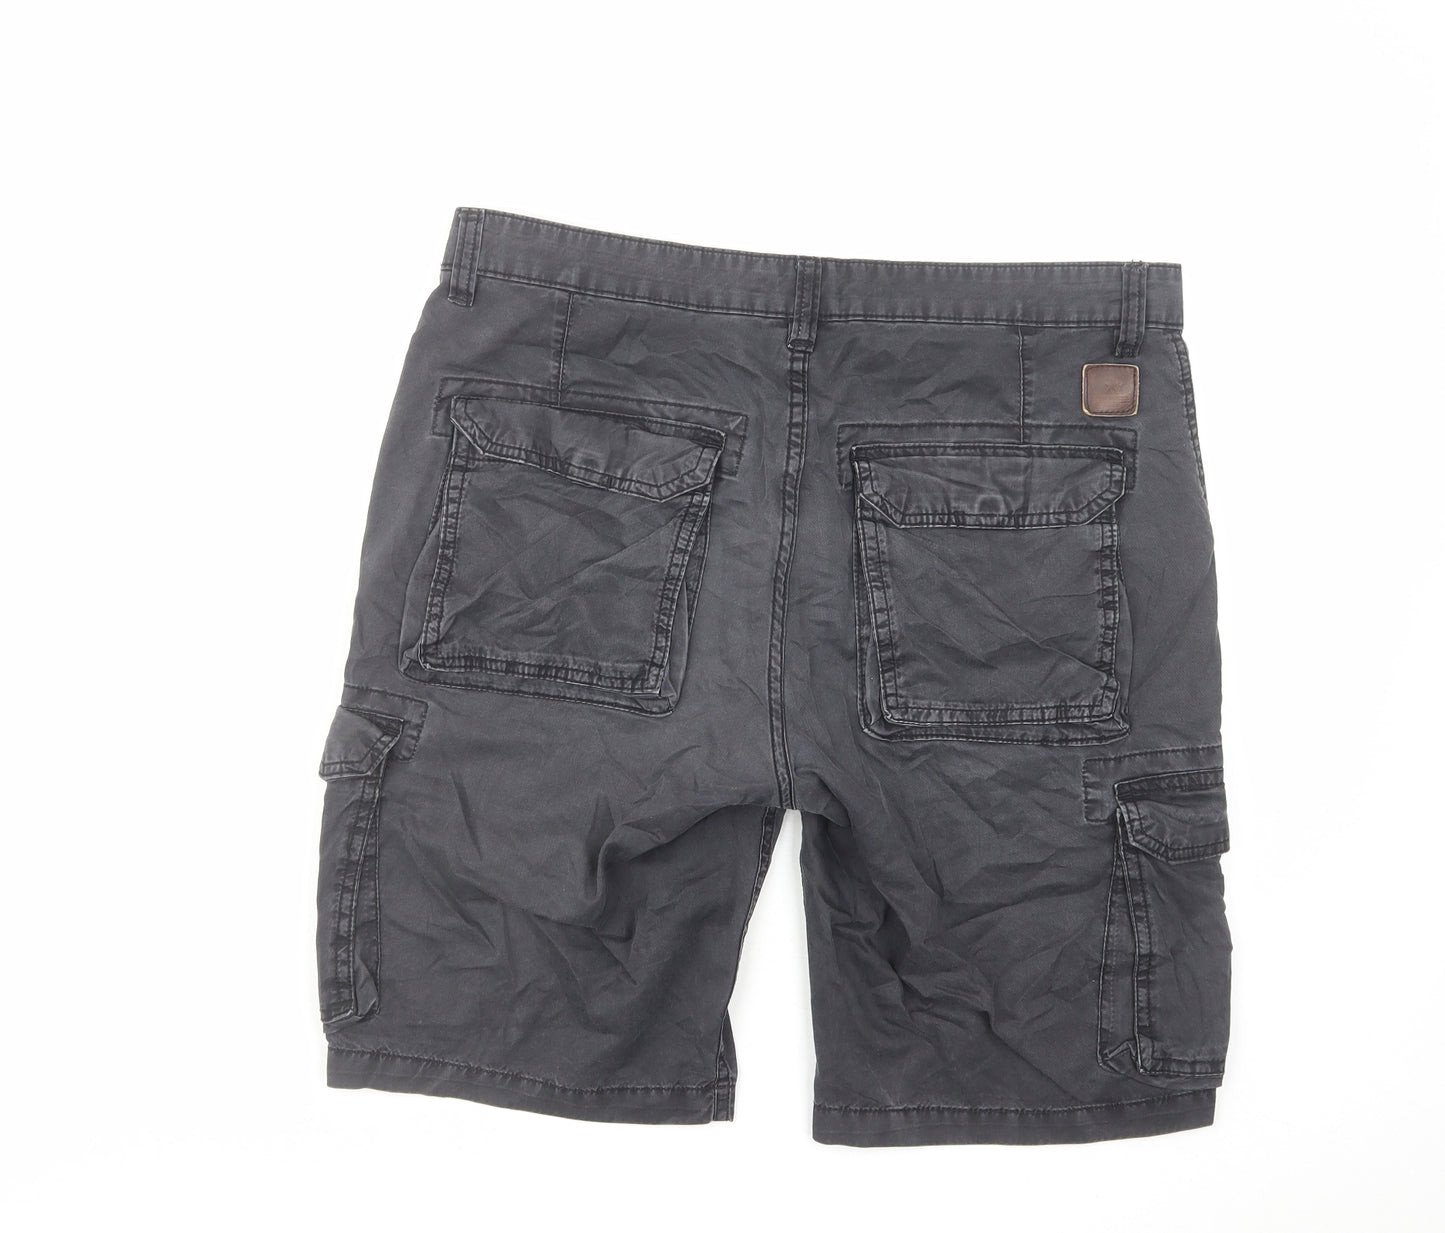 Shine Original Mens Grey Paisley Cotton Cargo Shorts Size M L11 in Regular Zip